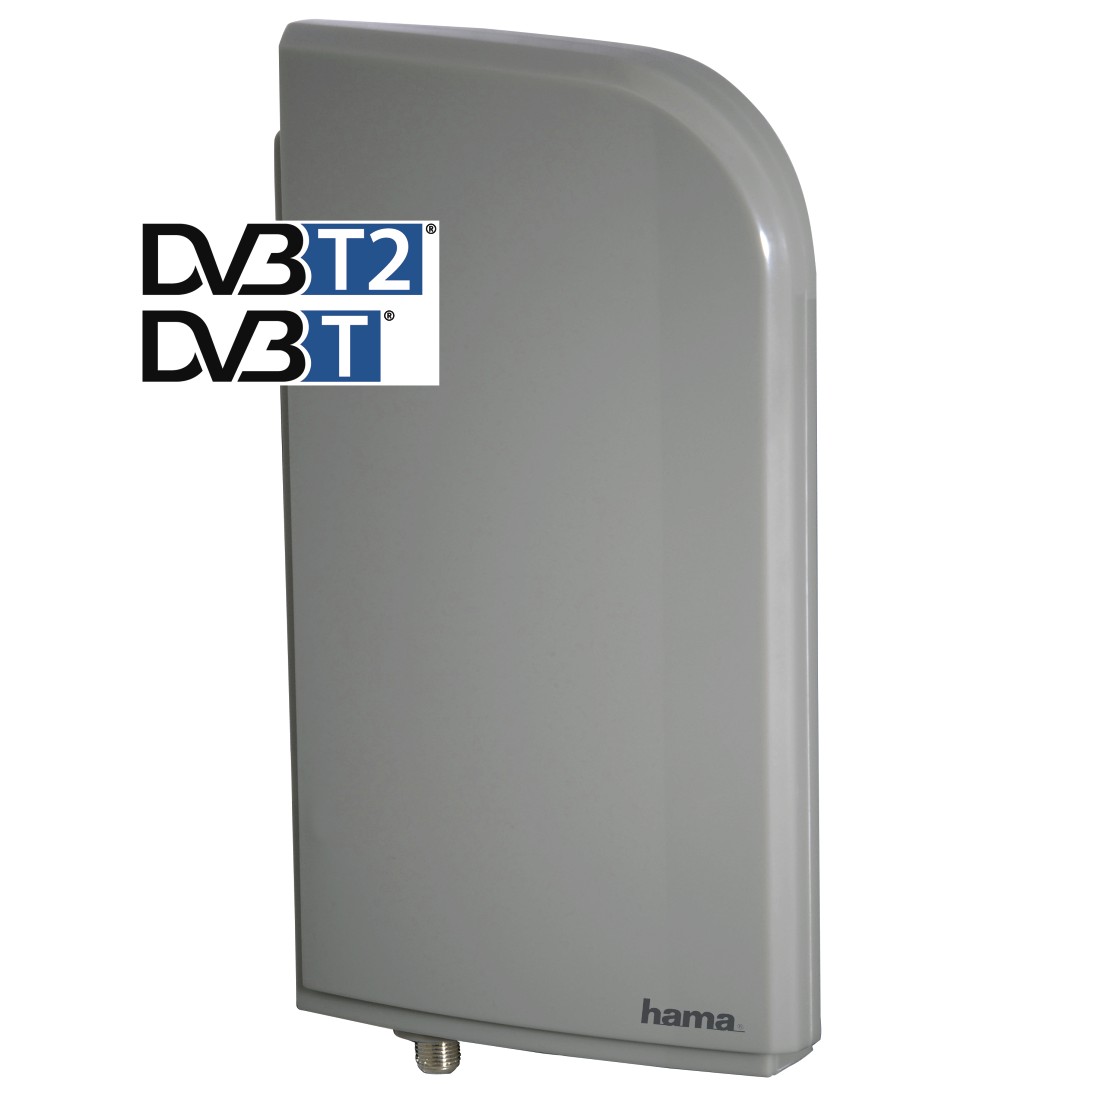 00044285 Hama DVB-T/DVB-T2 "Outdoor 20" antenna